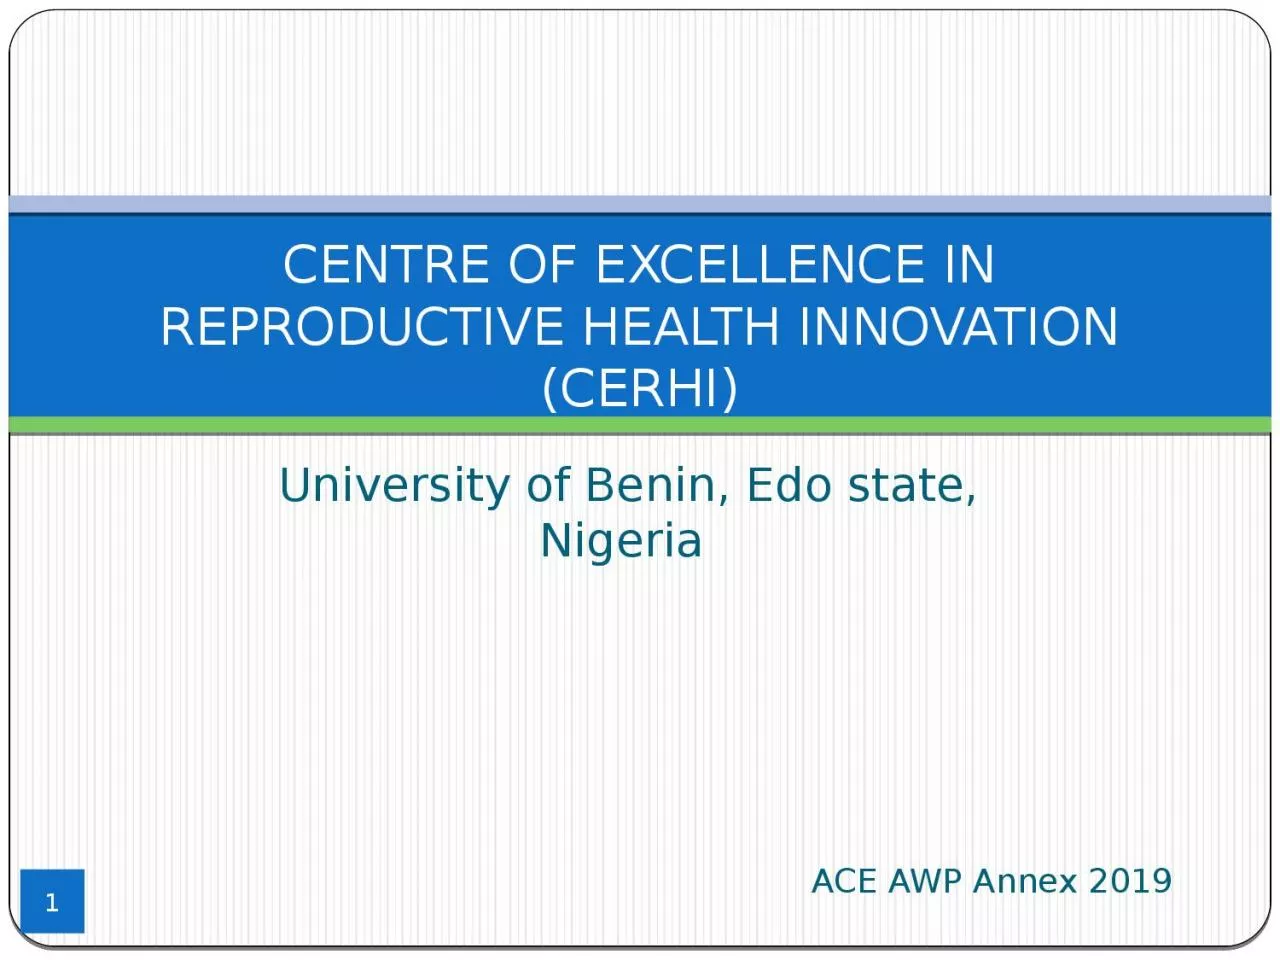 University of Benin, Edo state, Nigeria